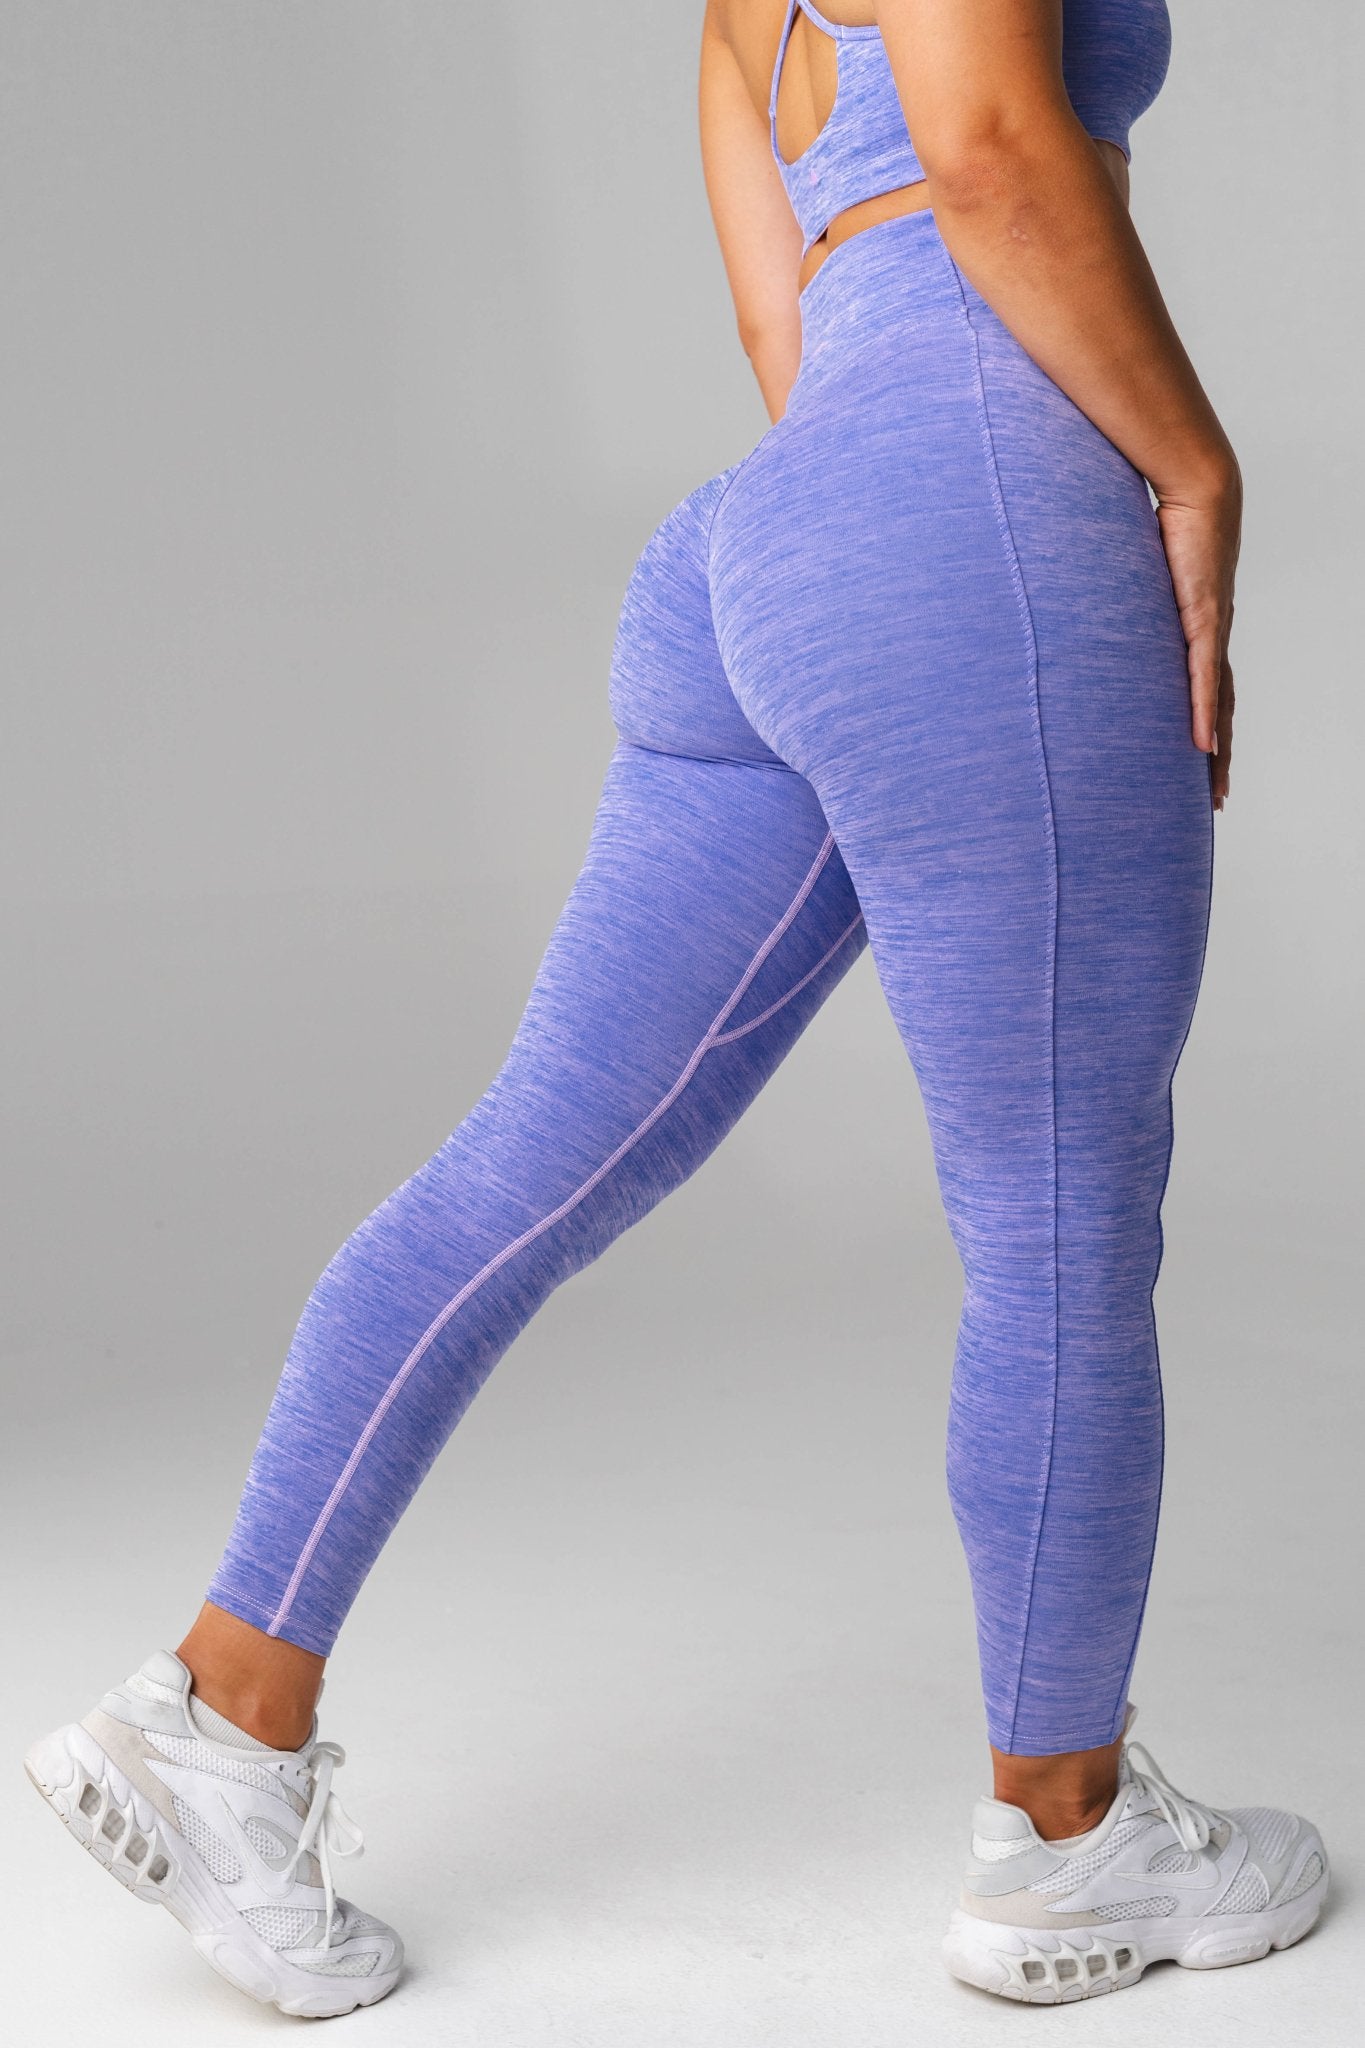 Lovable Blue Cotton Gym Wear Tights Yoga Pants With Pocket – Stilento